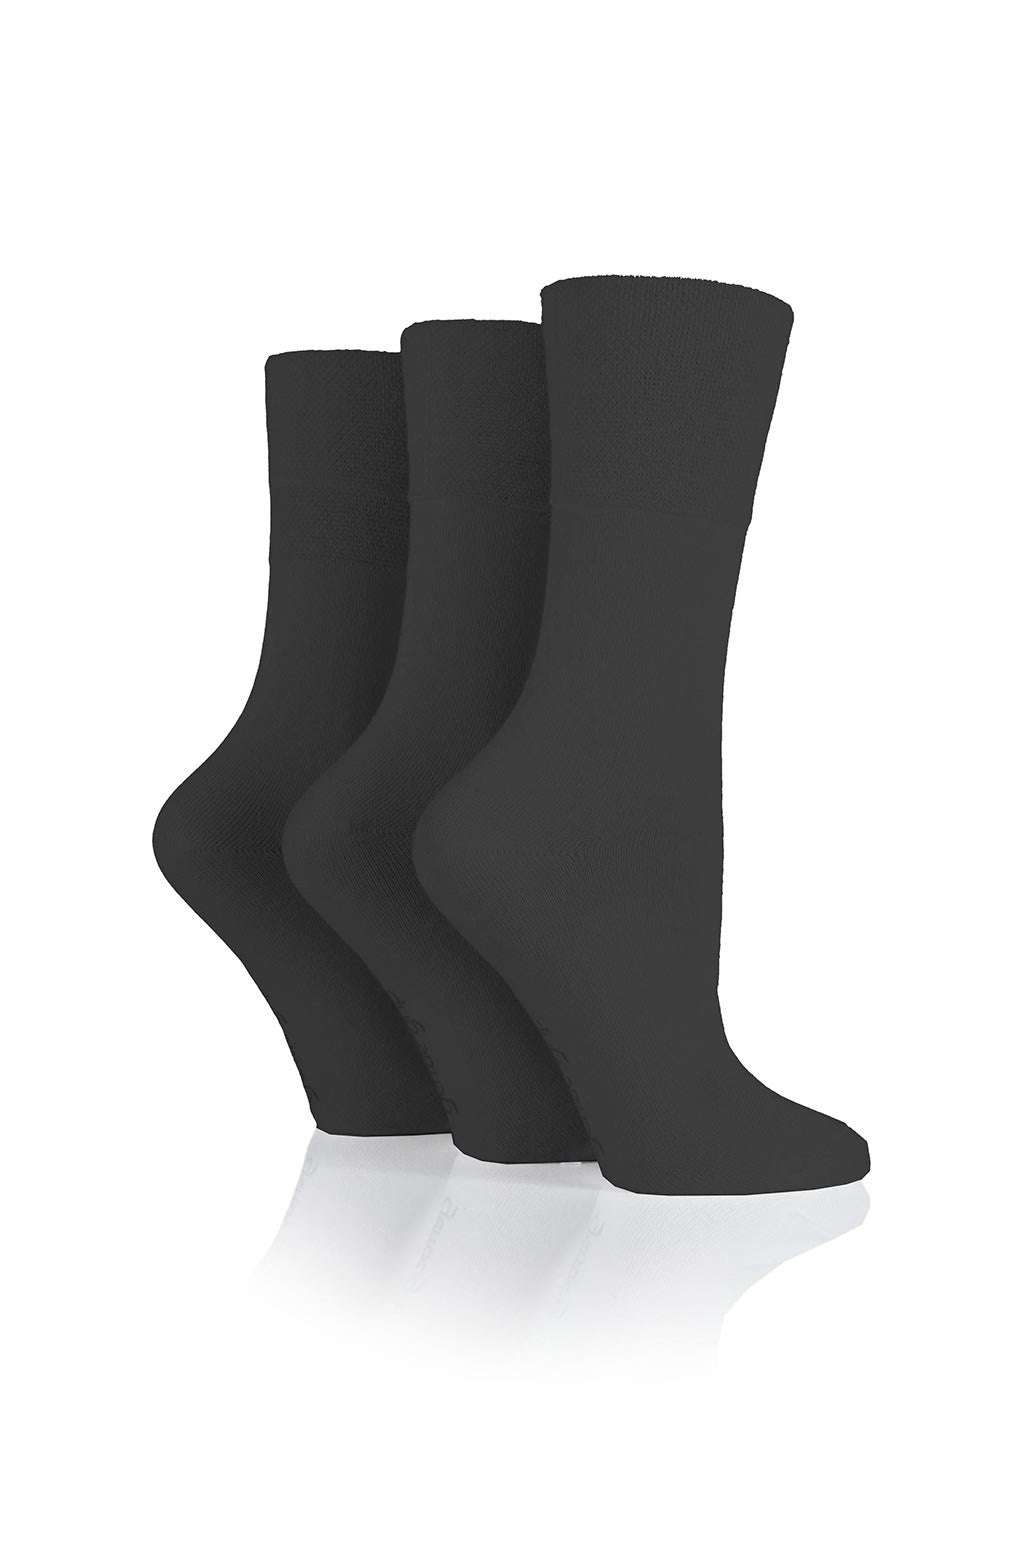 Women's Black Original Crew Non-Slip Socks - 3 pairs